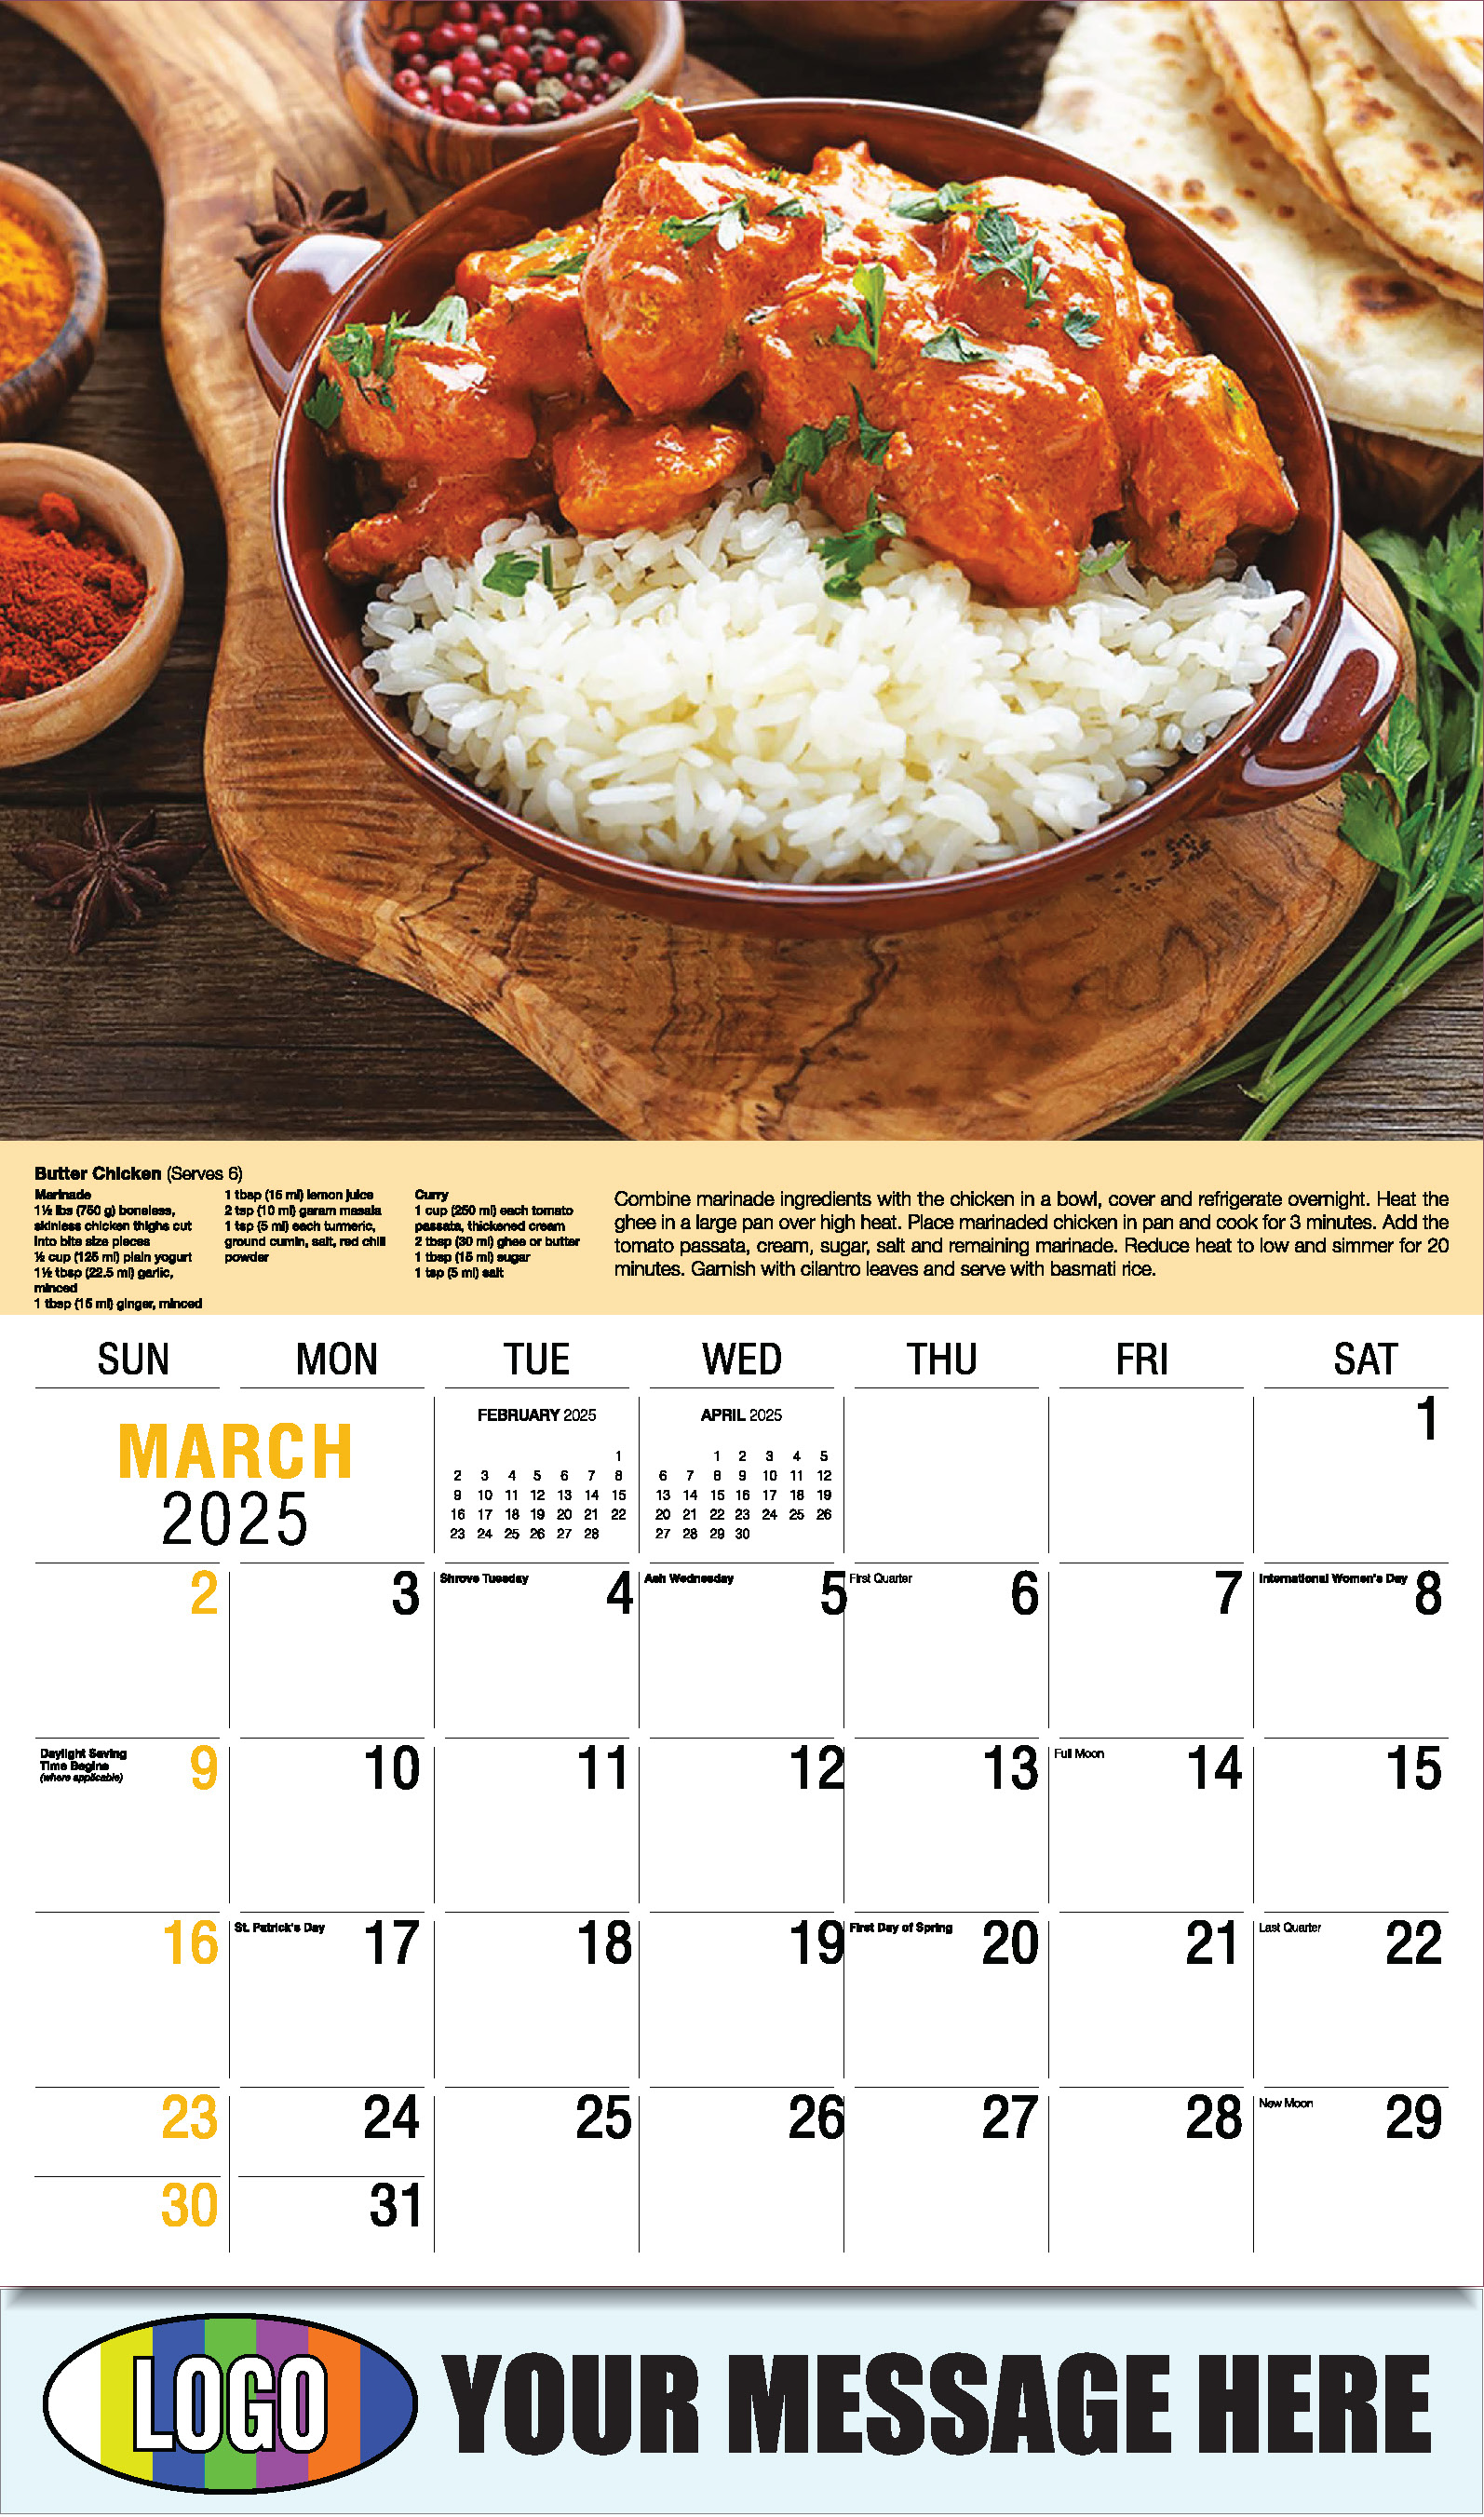 Recipes 2025 Business Promotional Calendar - March